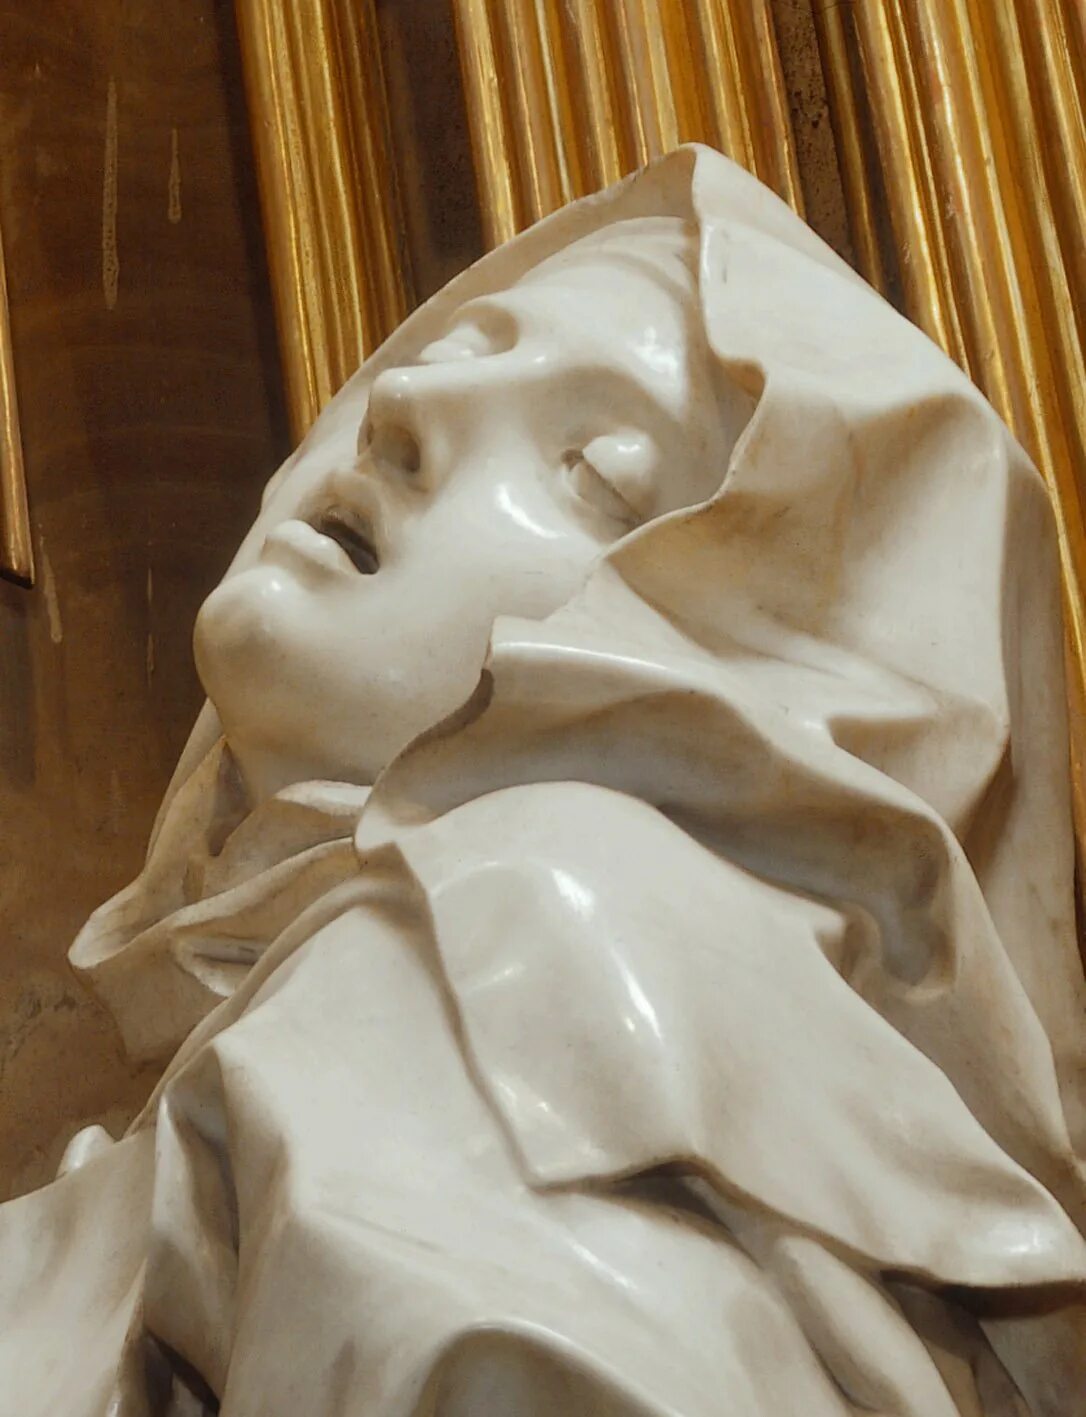 Лоренцо Бернини экстаз Святой Терезы. Лооенцо Берн ни экстаз Святой Терезы. Скульптура Бернини экстаз Святой Терезы.